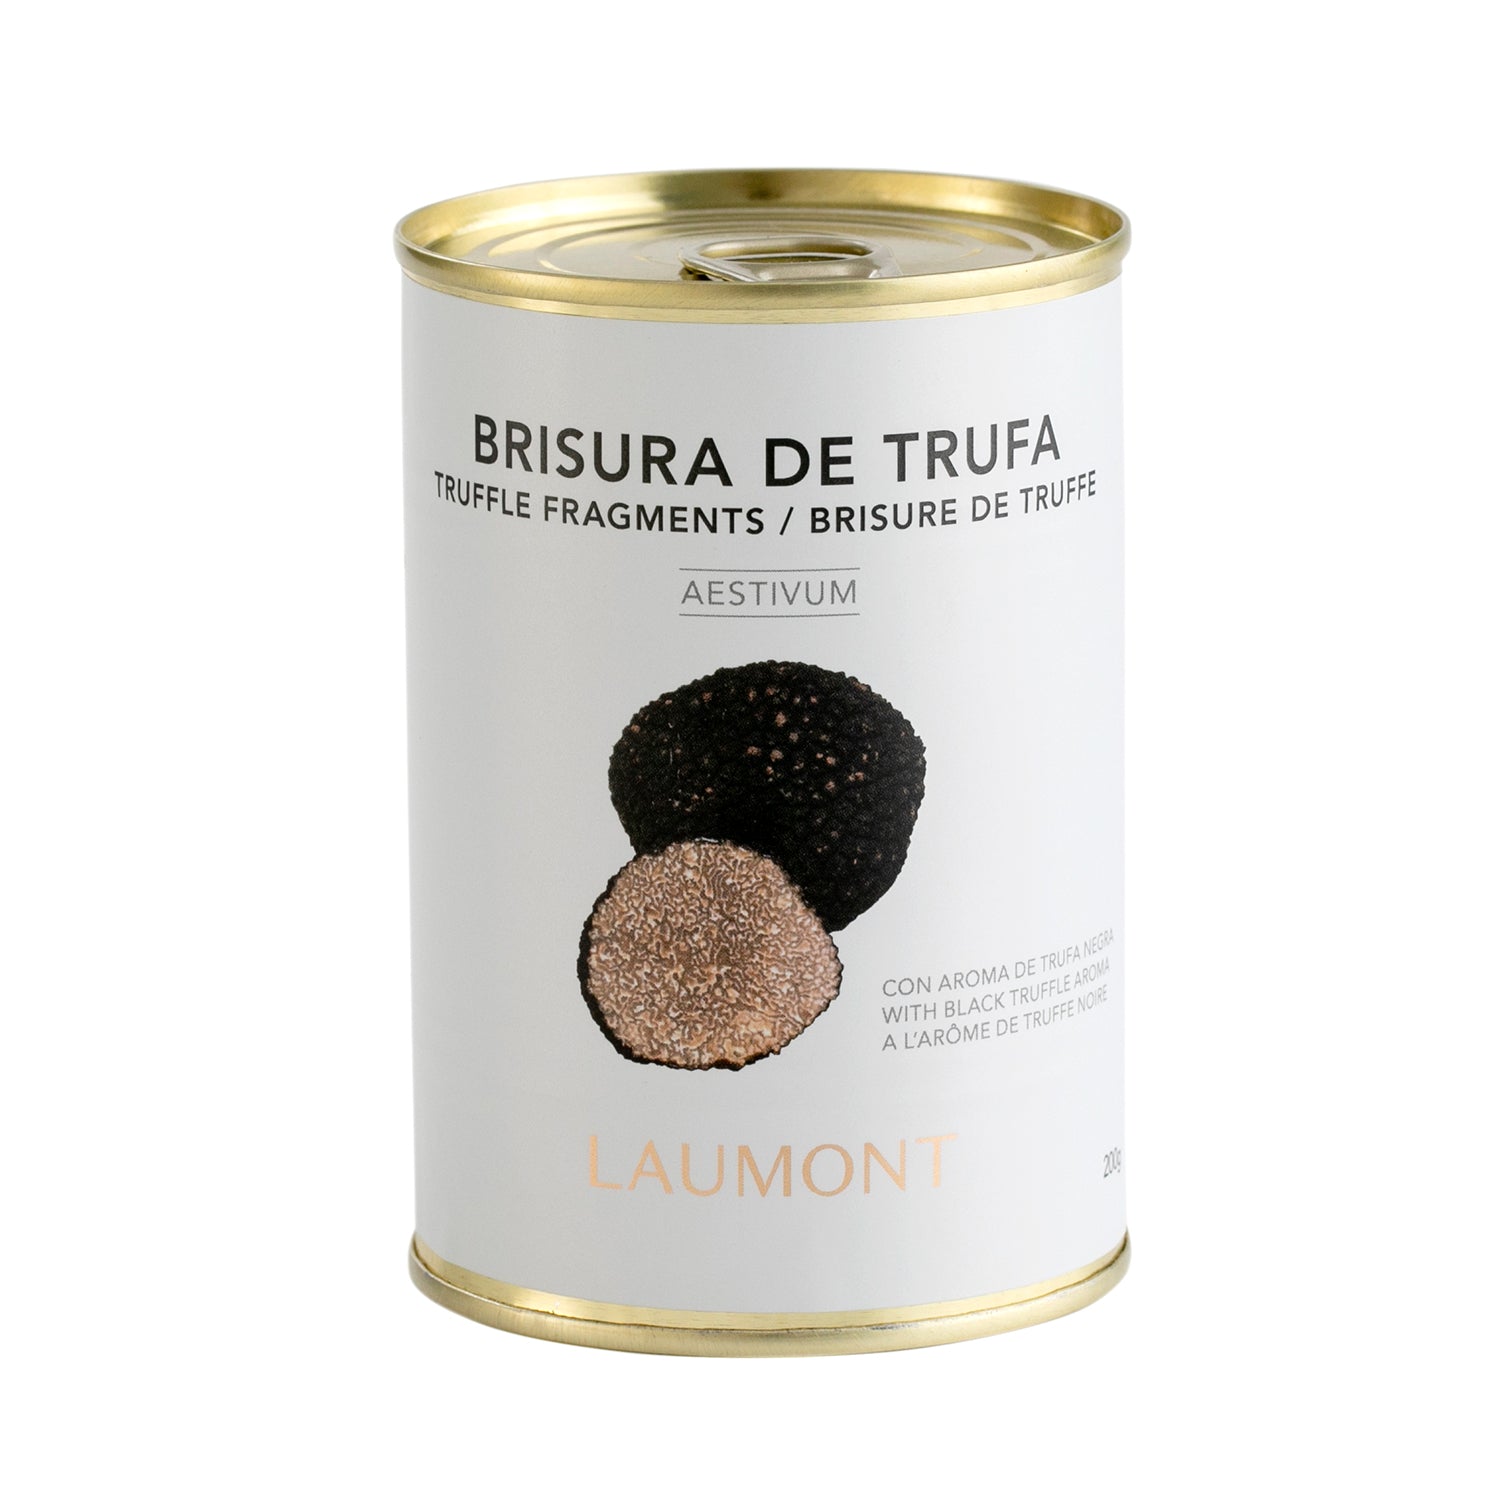 Acheter Huile de Truffe Noire – LAUMONT FRANCE